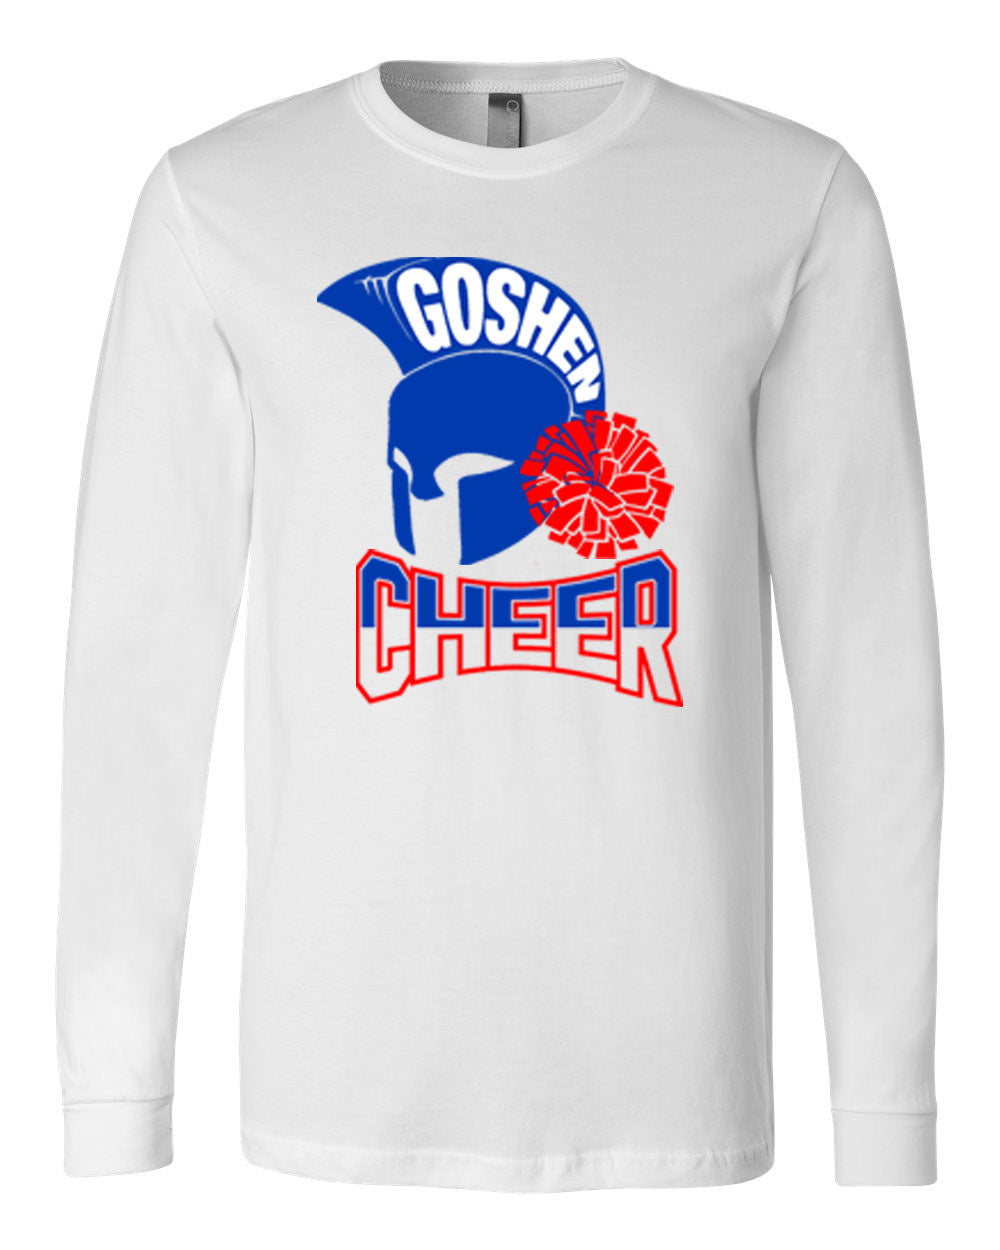 Goshen Cheer Design 8 Long Sleeve Shirt